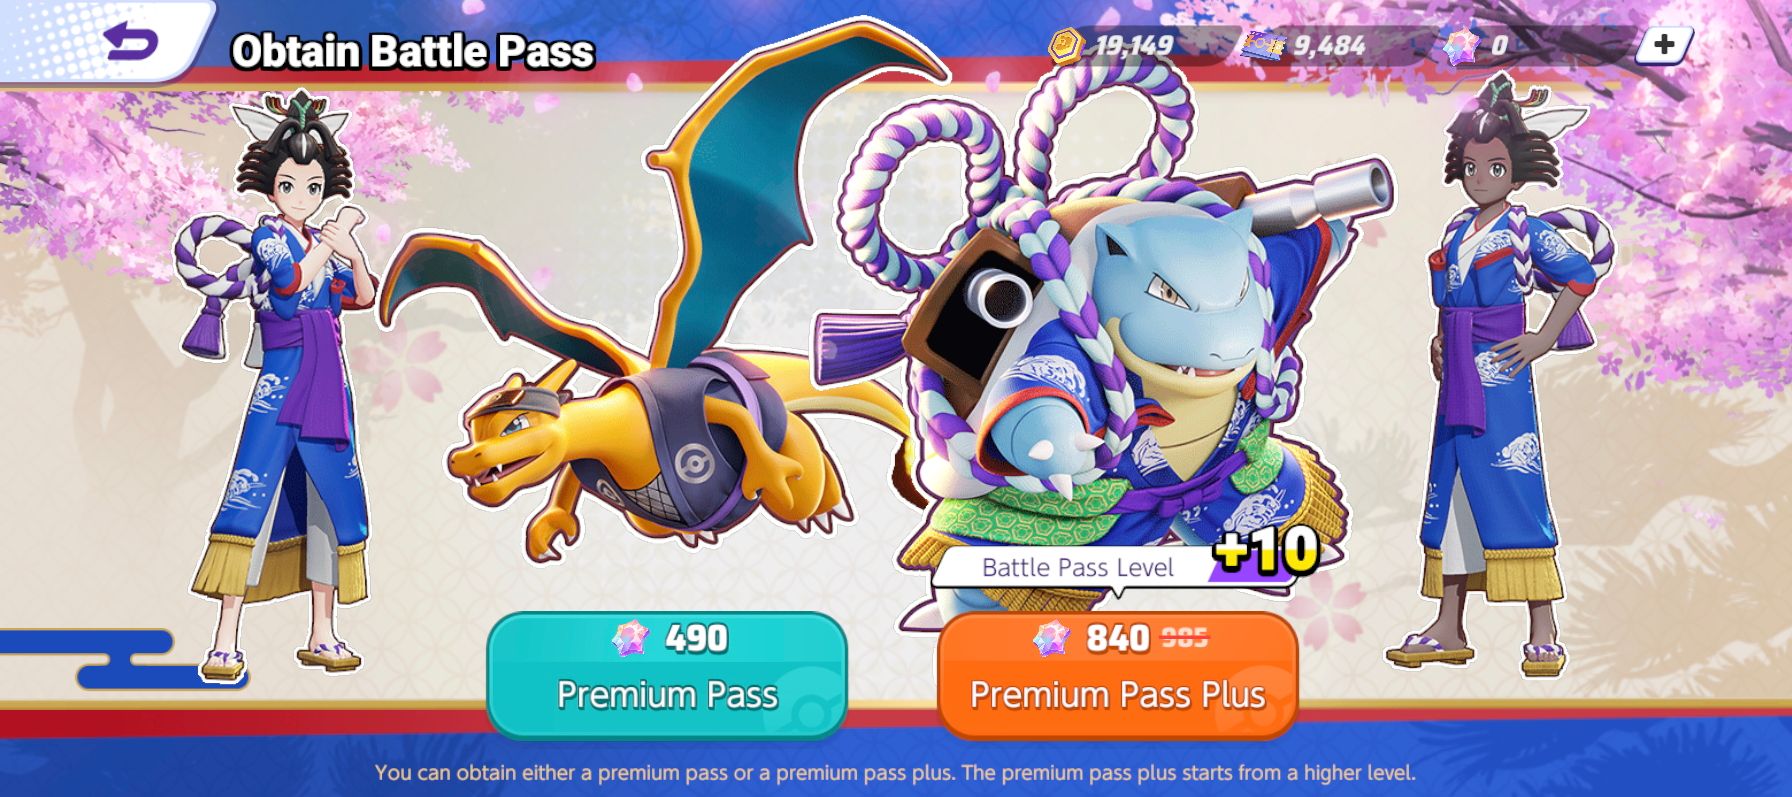 Pokemon Unite Season 7 Battle Pass Purchase Screen with Premium Pass and Premium Pass Plus options